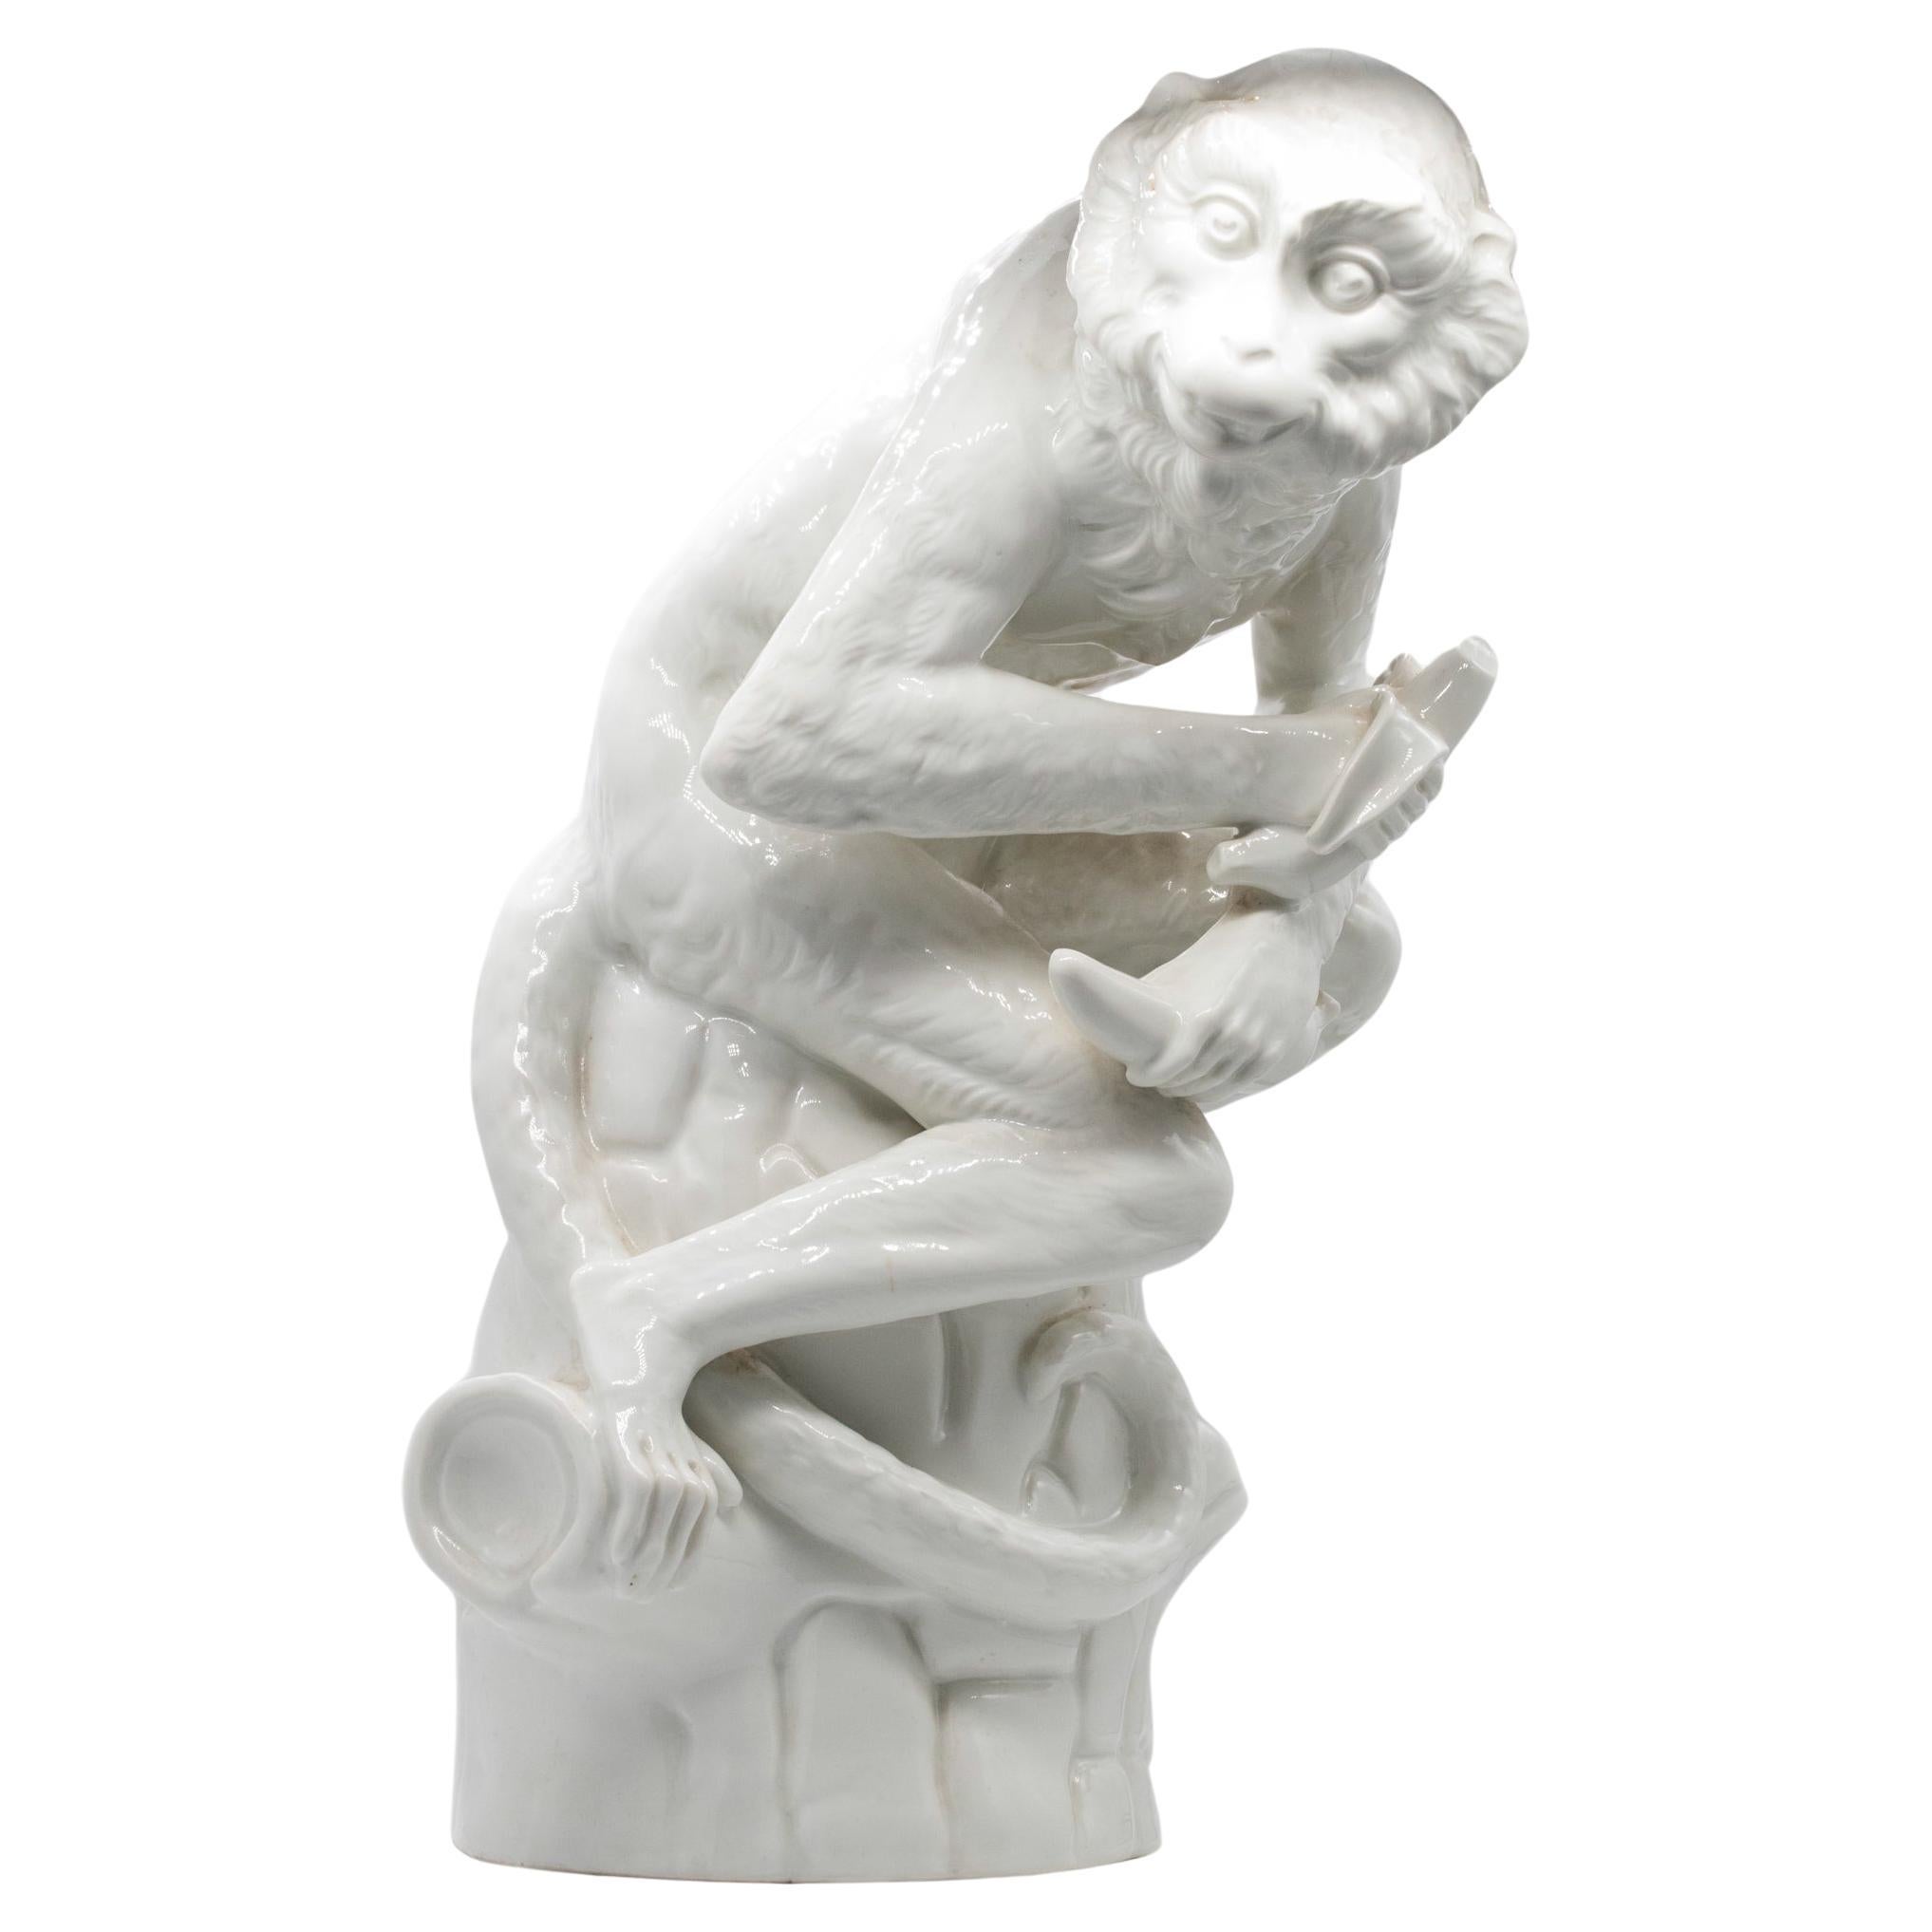 KPM Germany 1950 Seated Monkey Eating A Banana Figure In White Glazed Porcelain For Sale